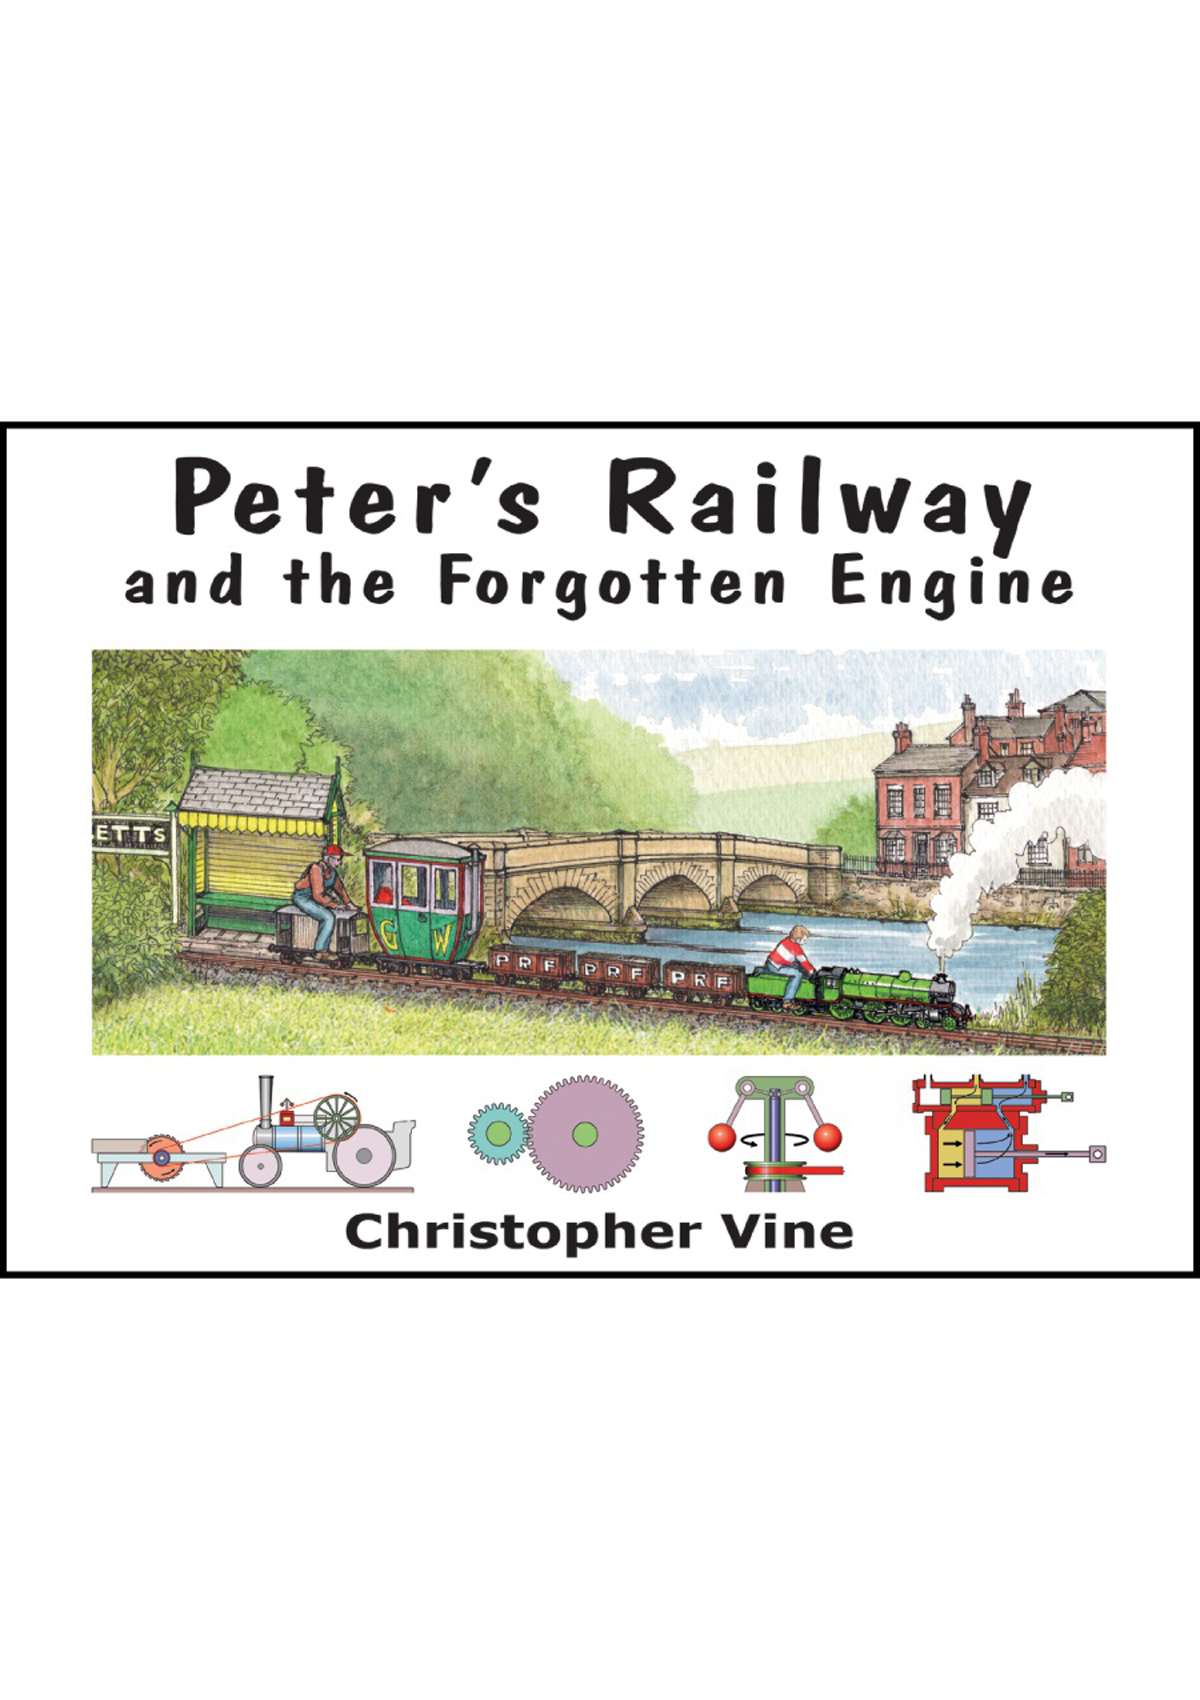 Book - Peter's Railway & the Forgotten Engine
